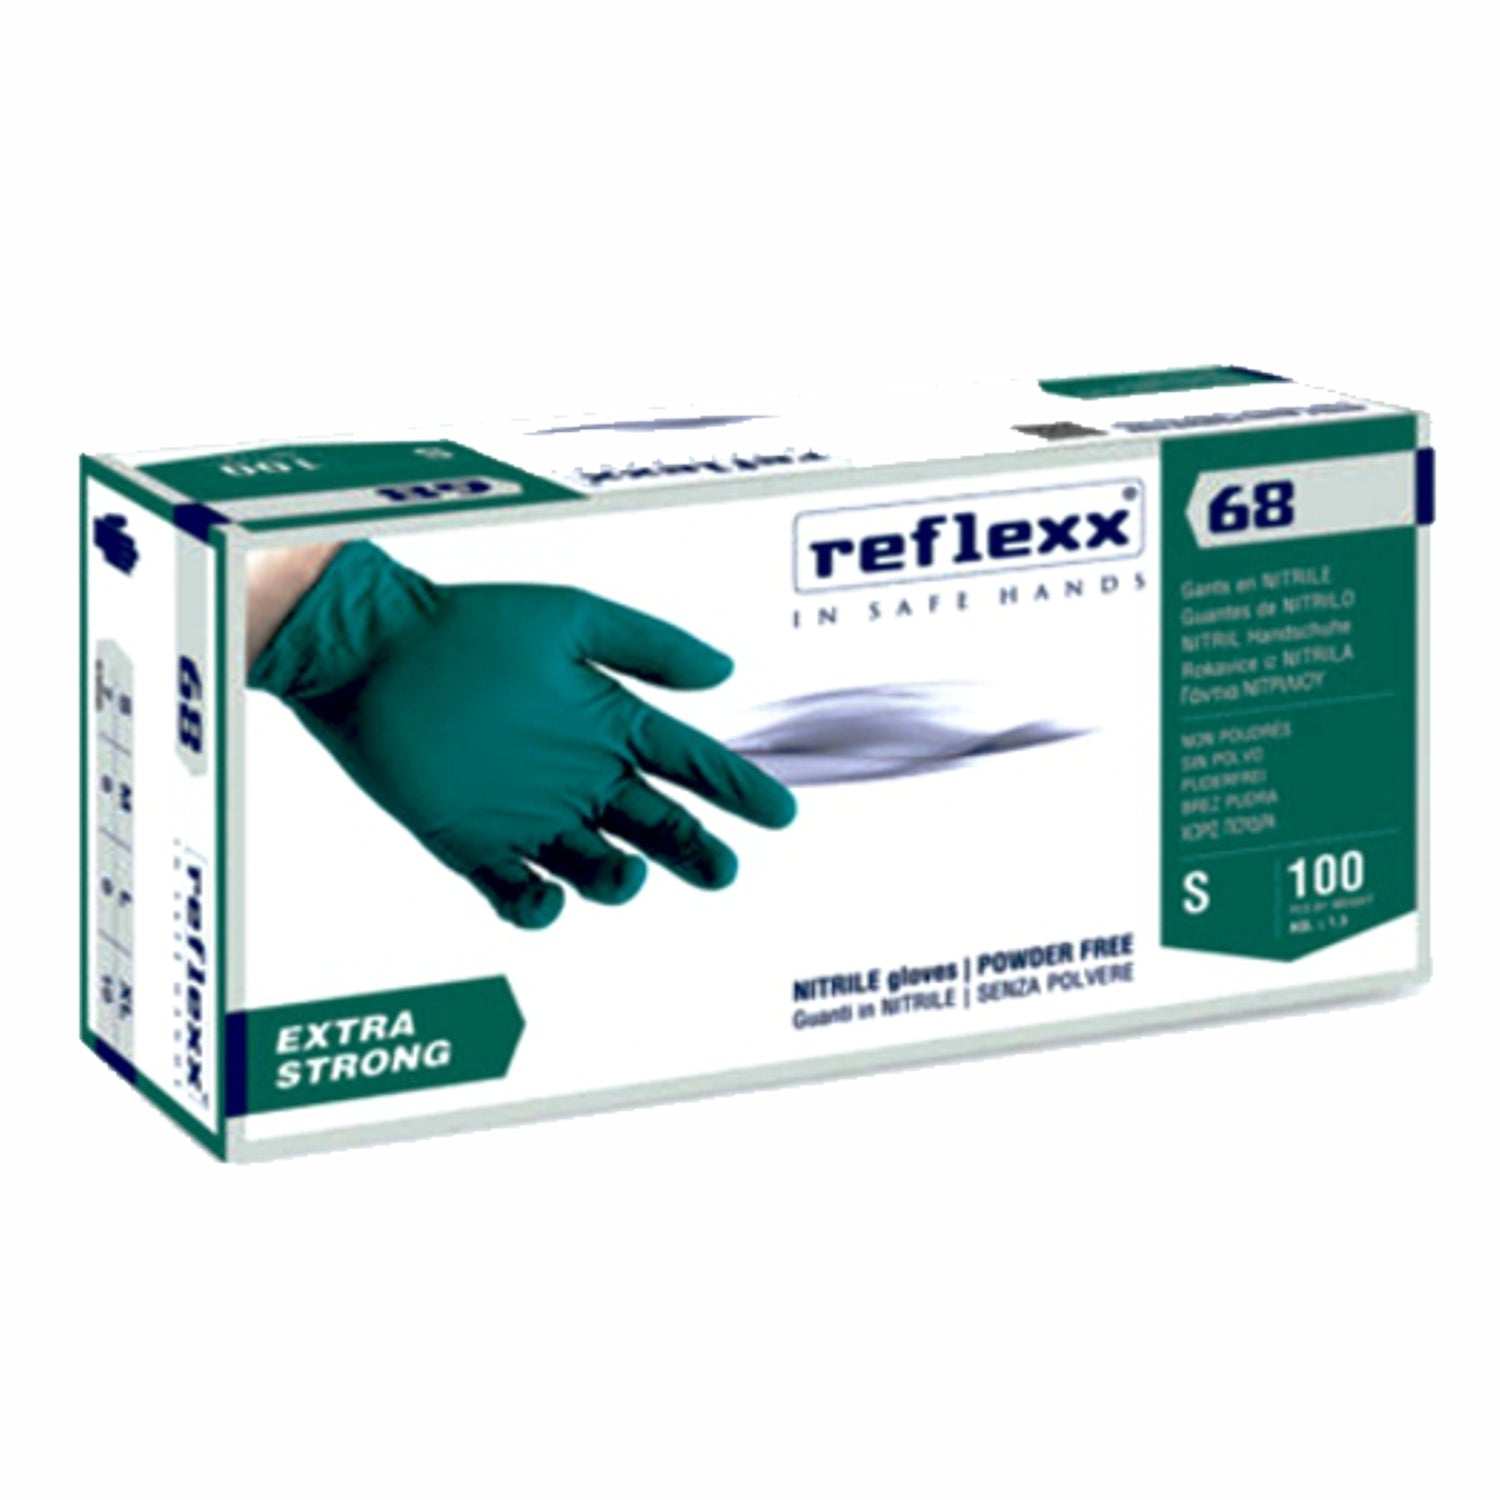 Reflexx 68 guanti monouso in nitrile verde